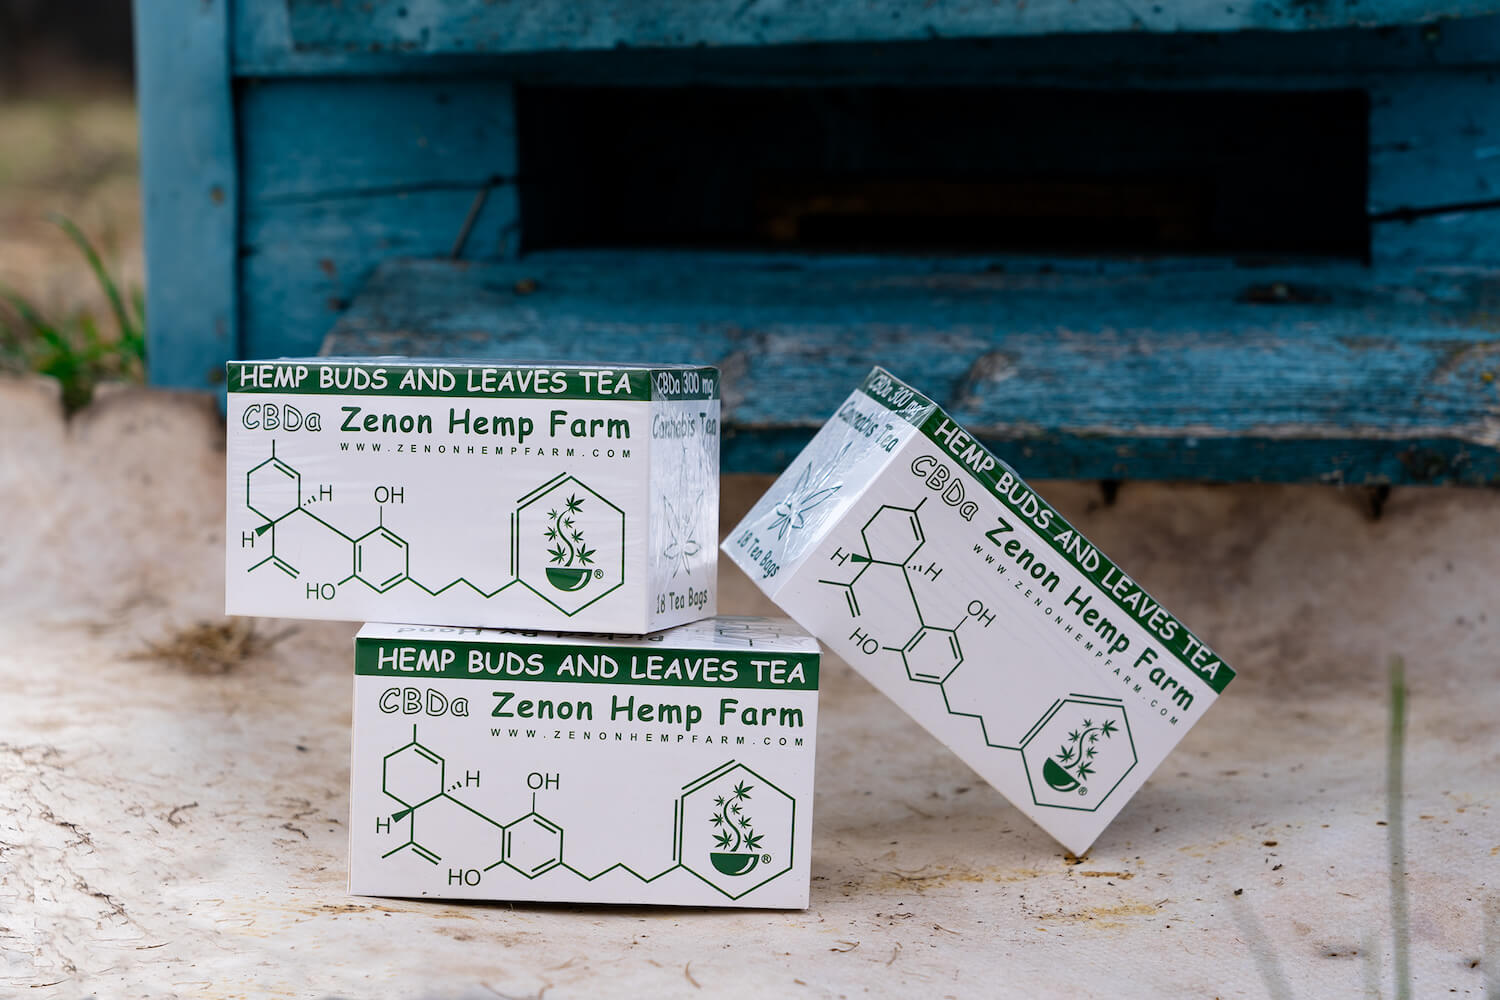 Hemp tea packs produced on Zenon Hemp Farm